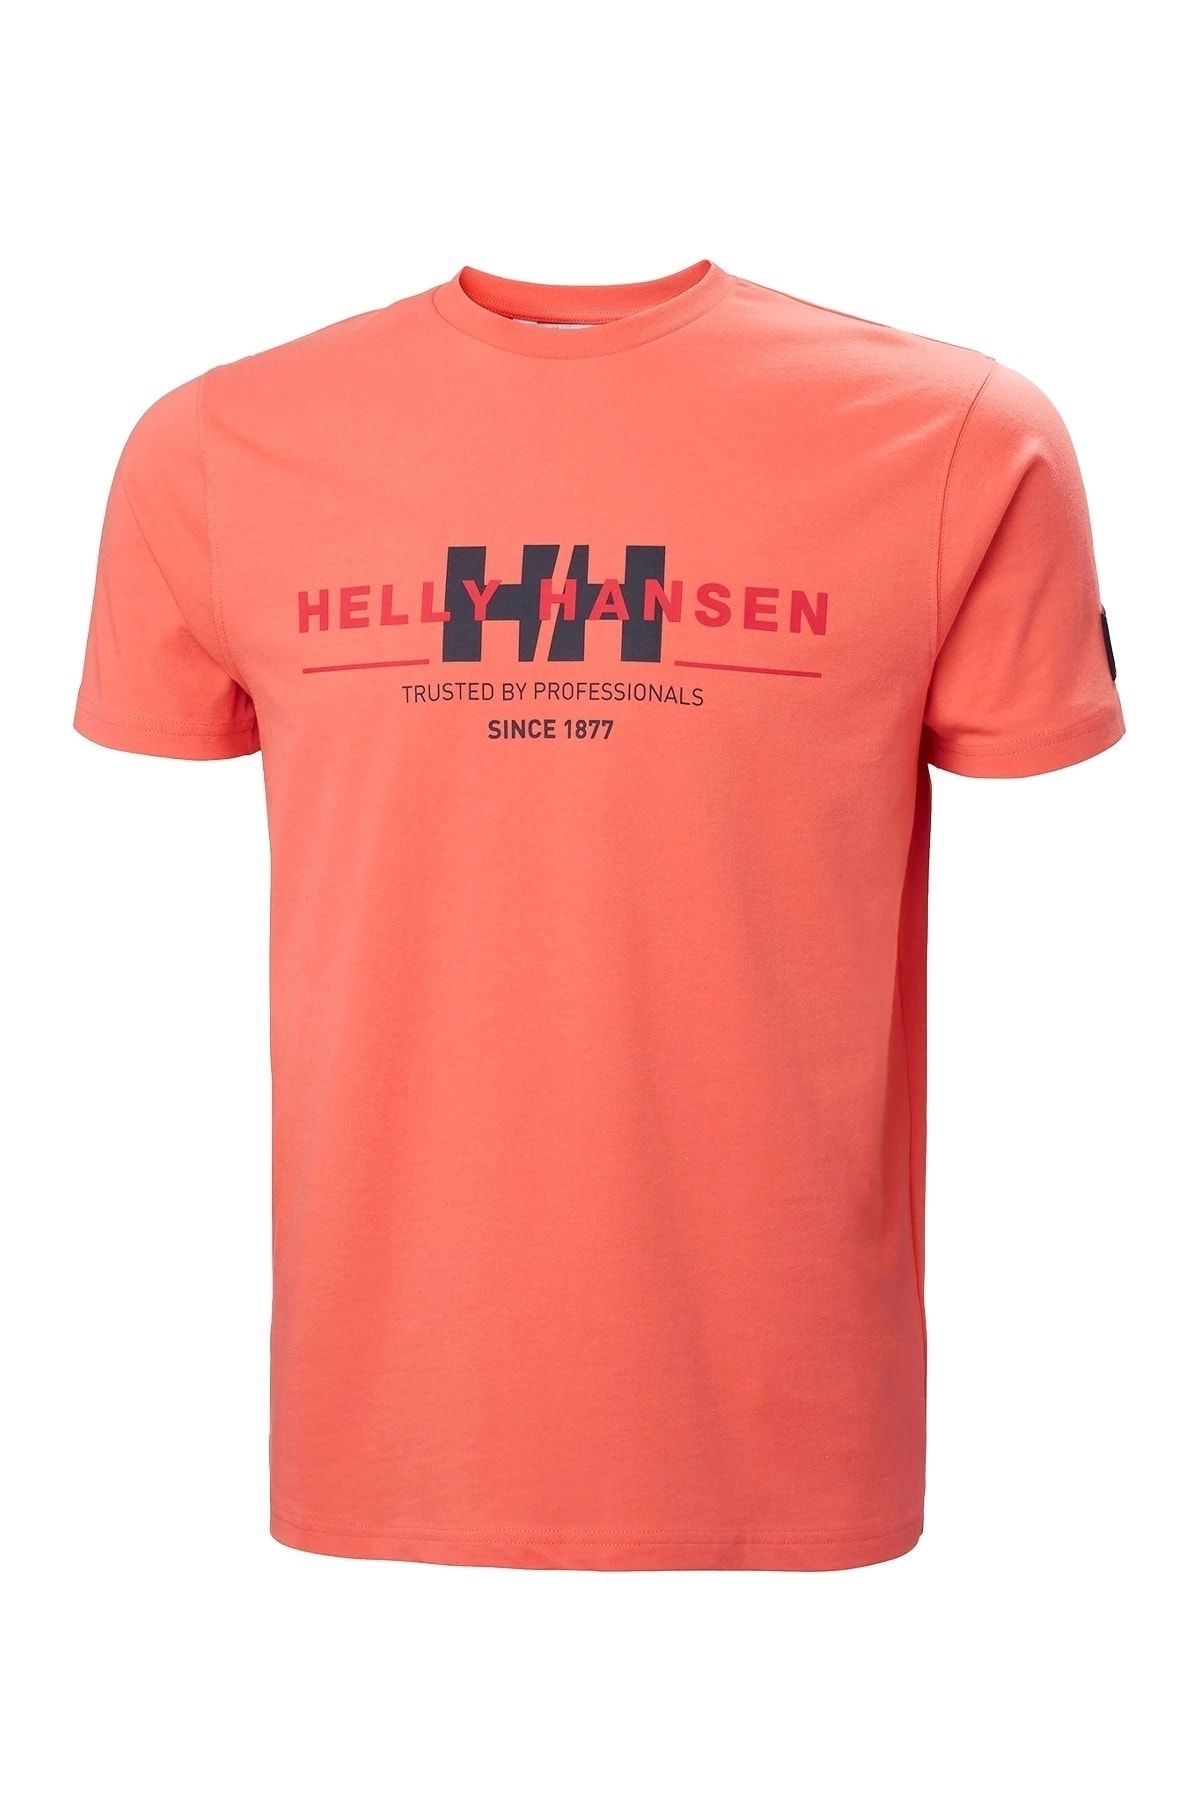 Helly Hansen Rwb Graphic Erkek T-shirt - 53763